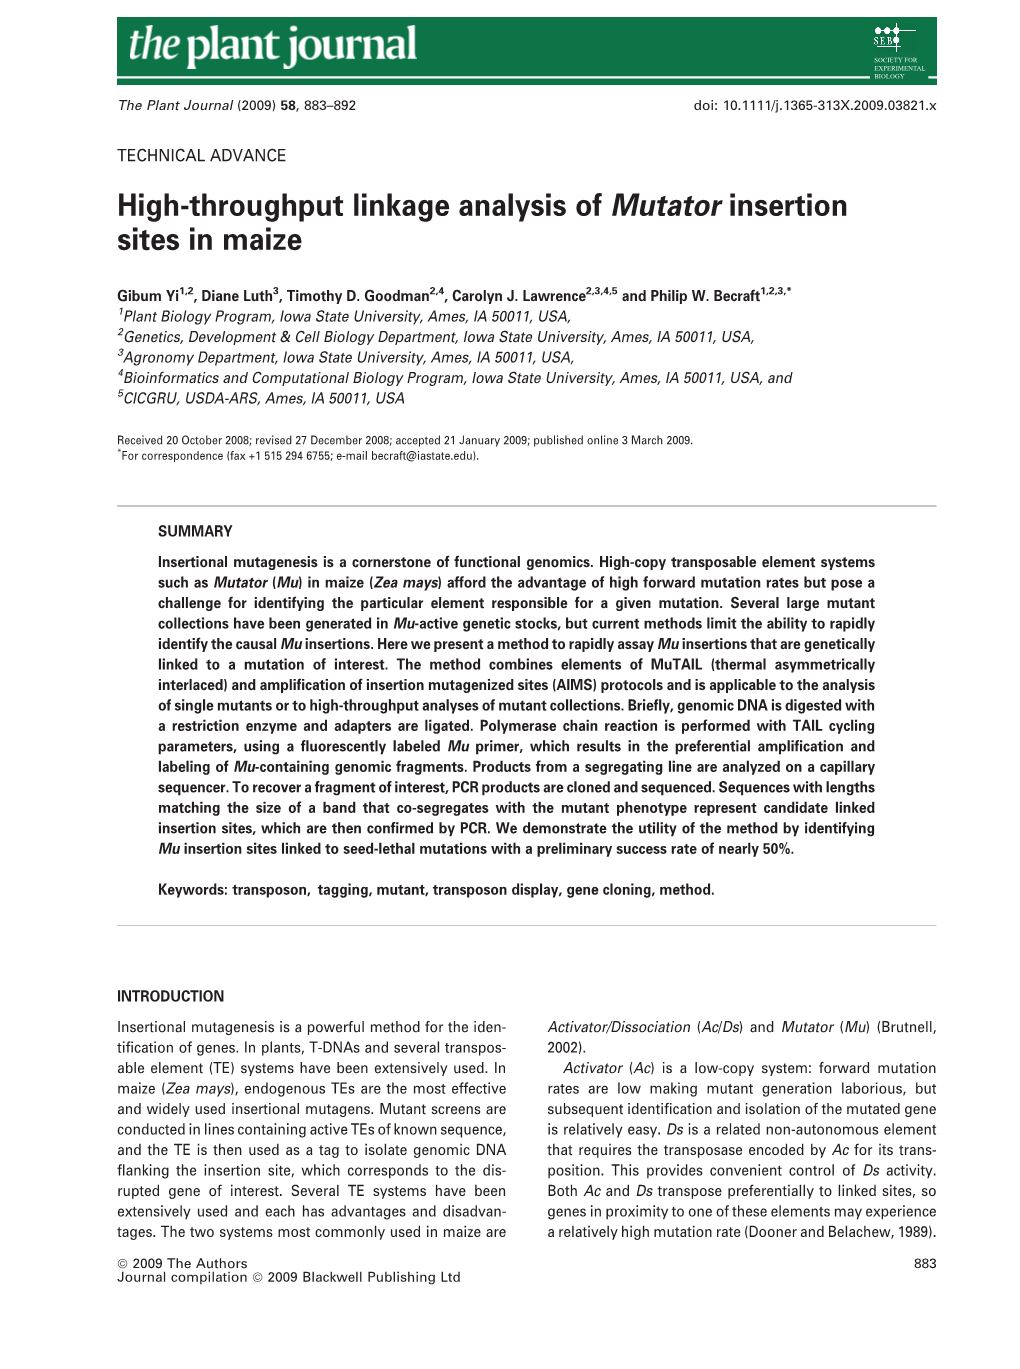 High-Throughput Linkage Analysis of Mutator Insertion Sites in Maize